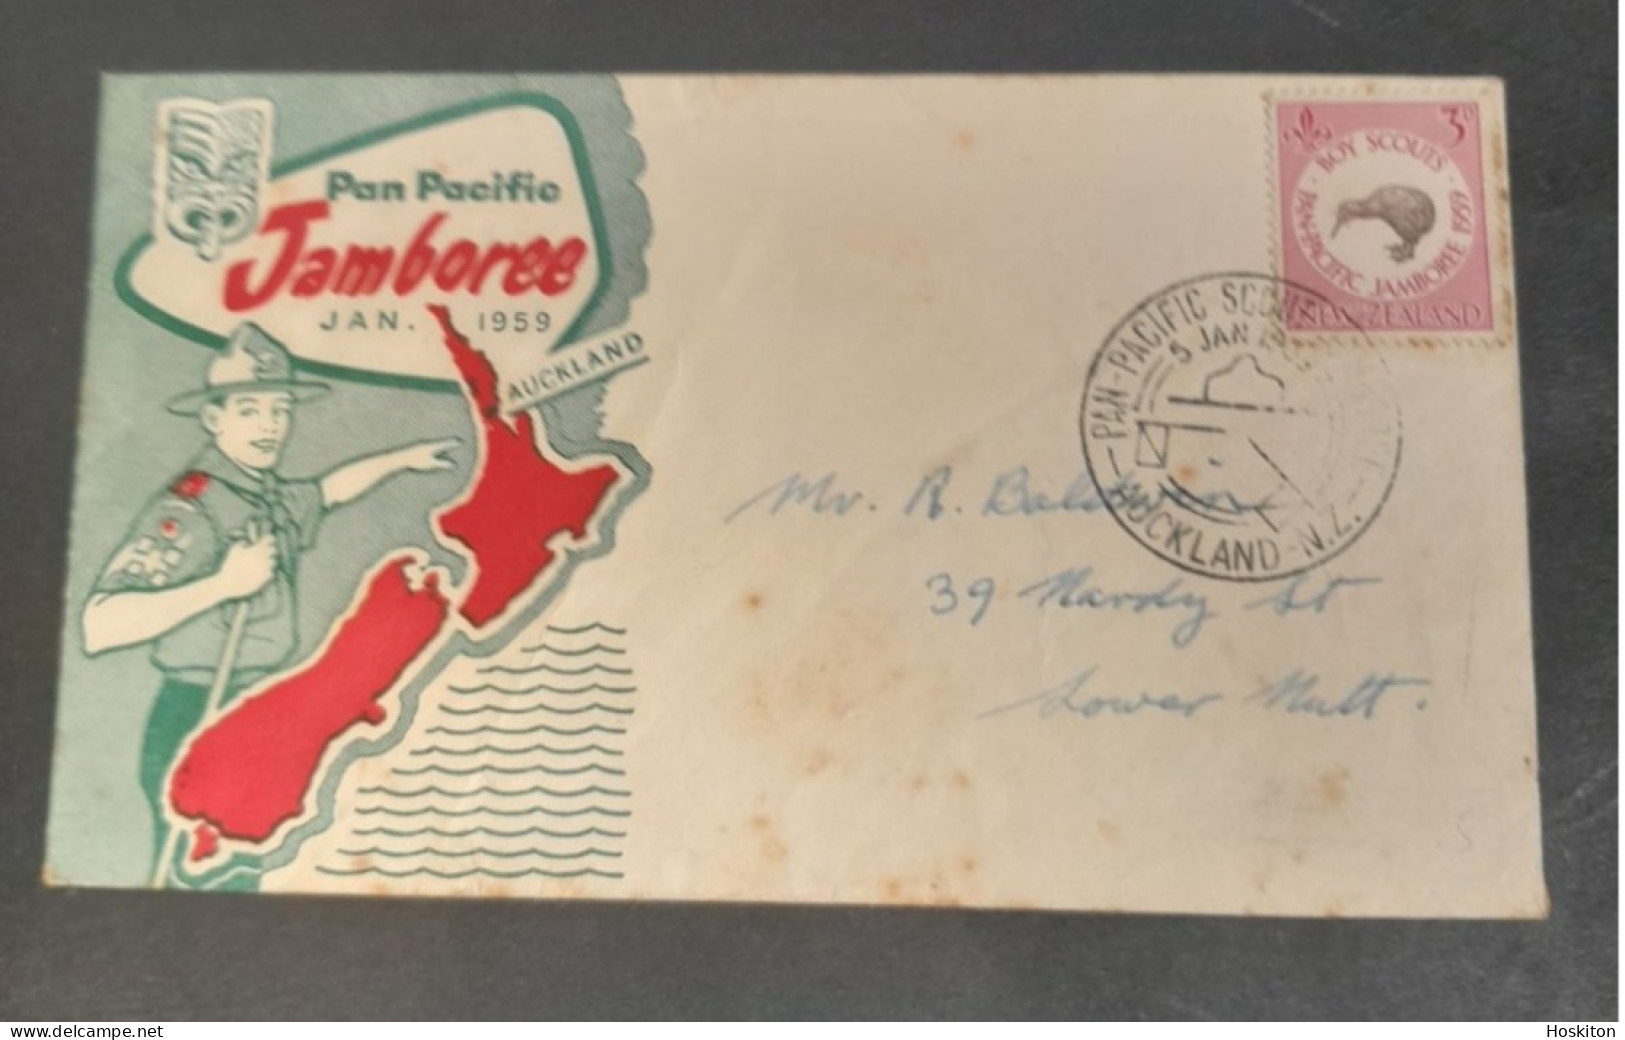 Pan Pacific Jamboree 1959 Auckland NZ - Cartas & Documentos